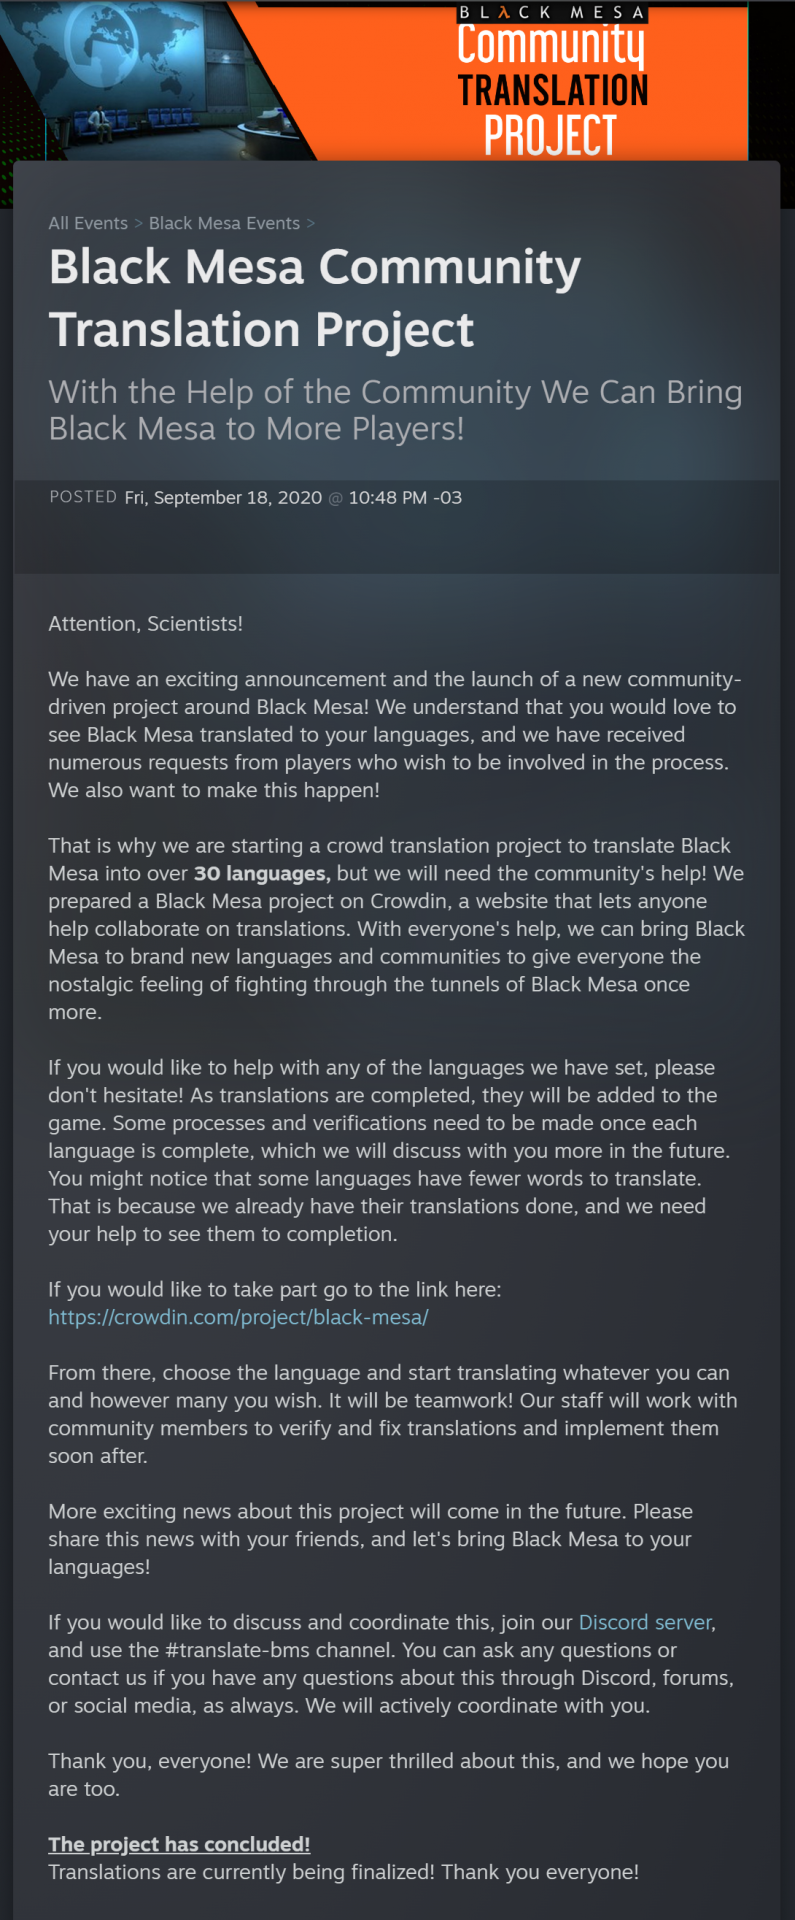 Vega Digital Awards Winner - Black Mesa Community Translation Project, Infernozilla